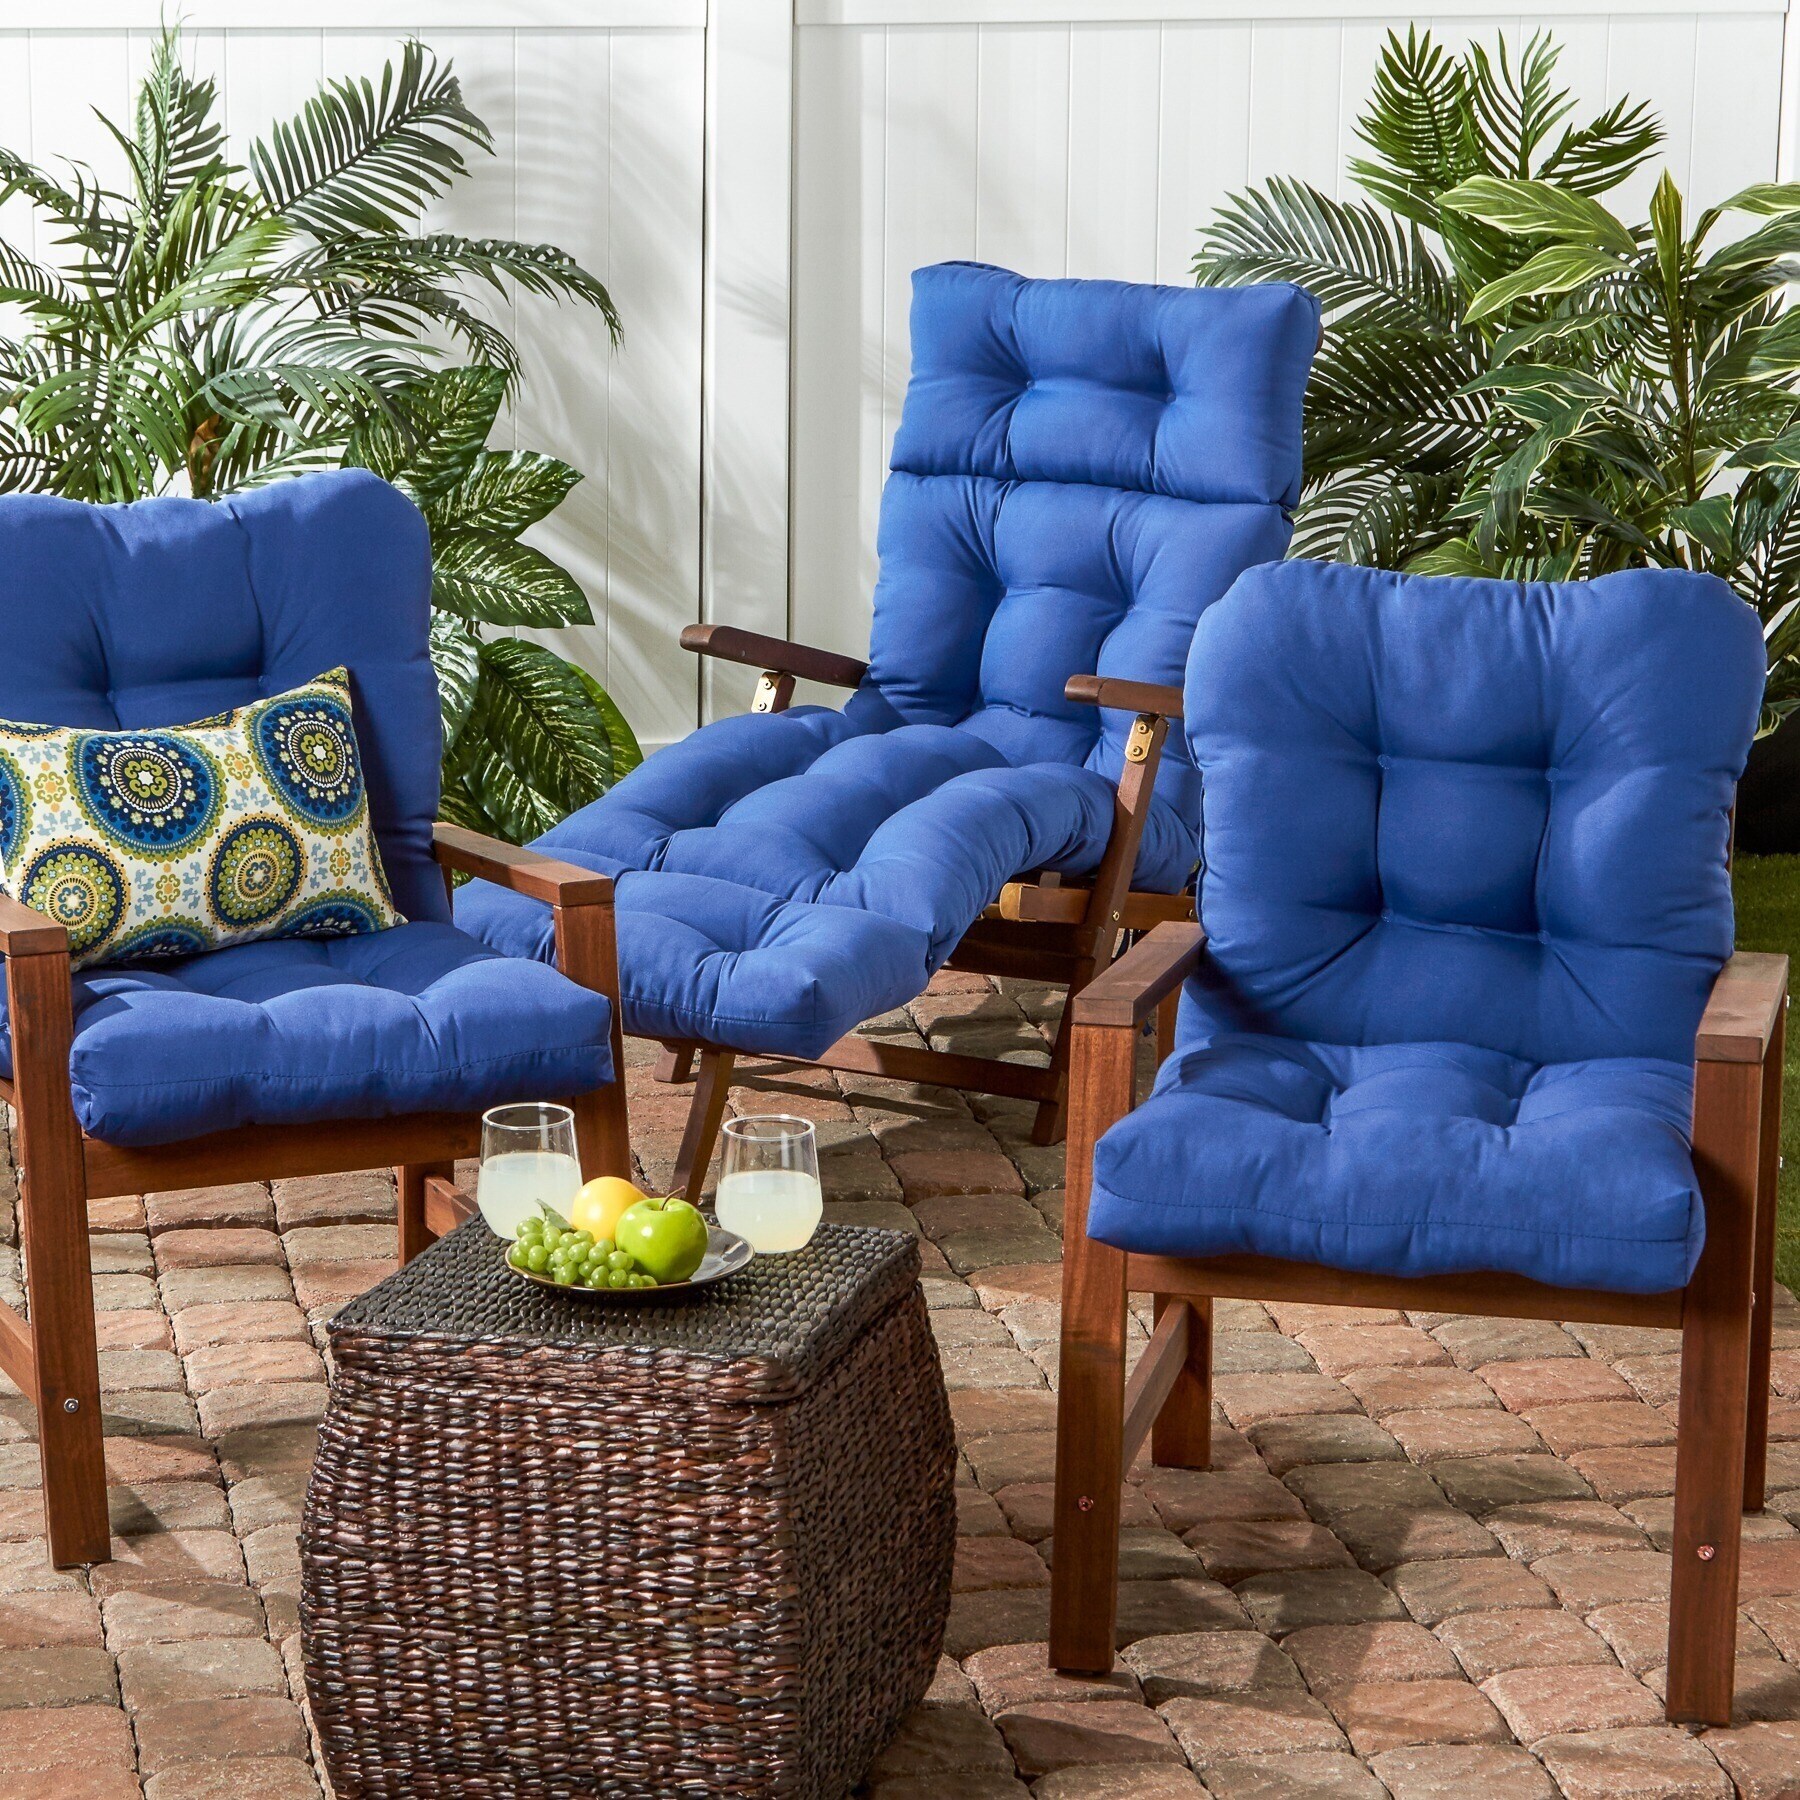 Indoor & Outdoor Seat/Black Cushion Color: Marine Blue